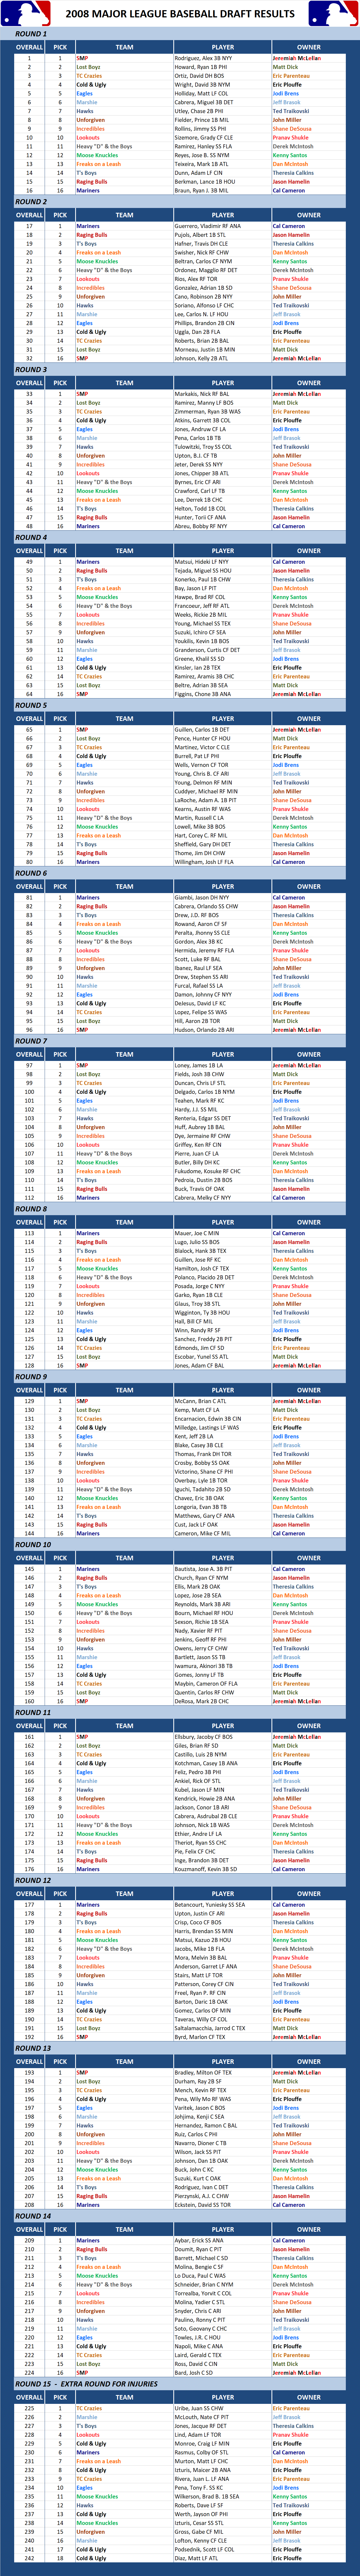 2008 Major league Baseball Draft Results